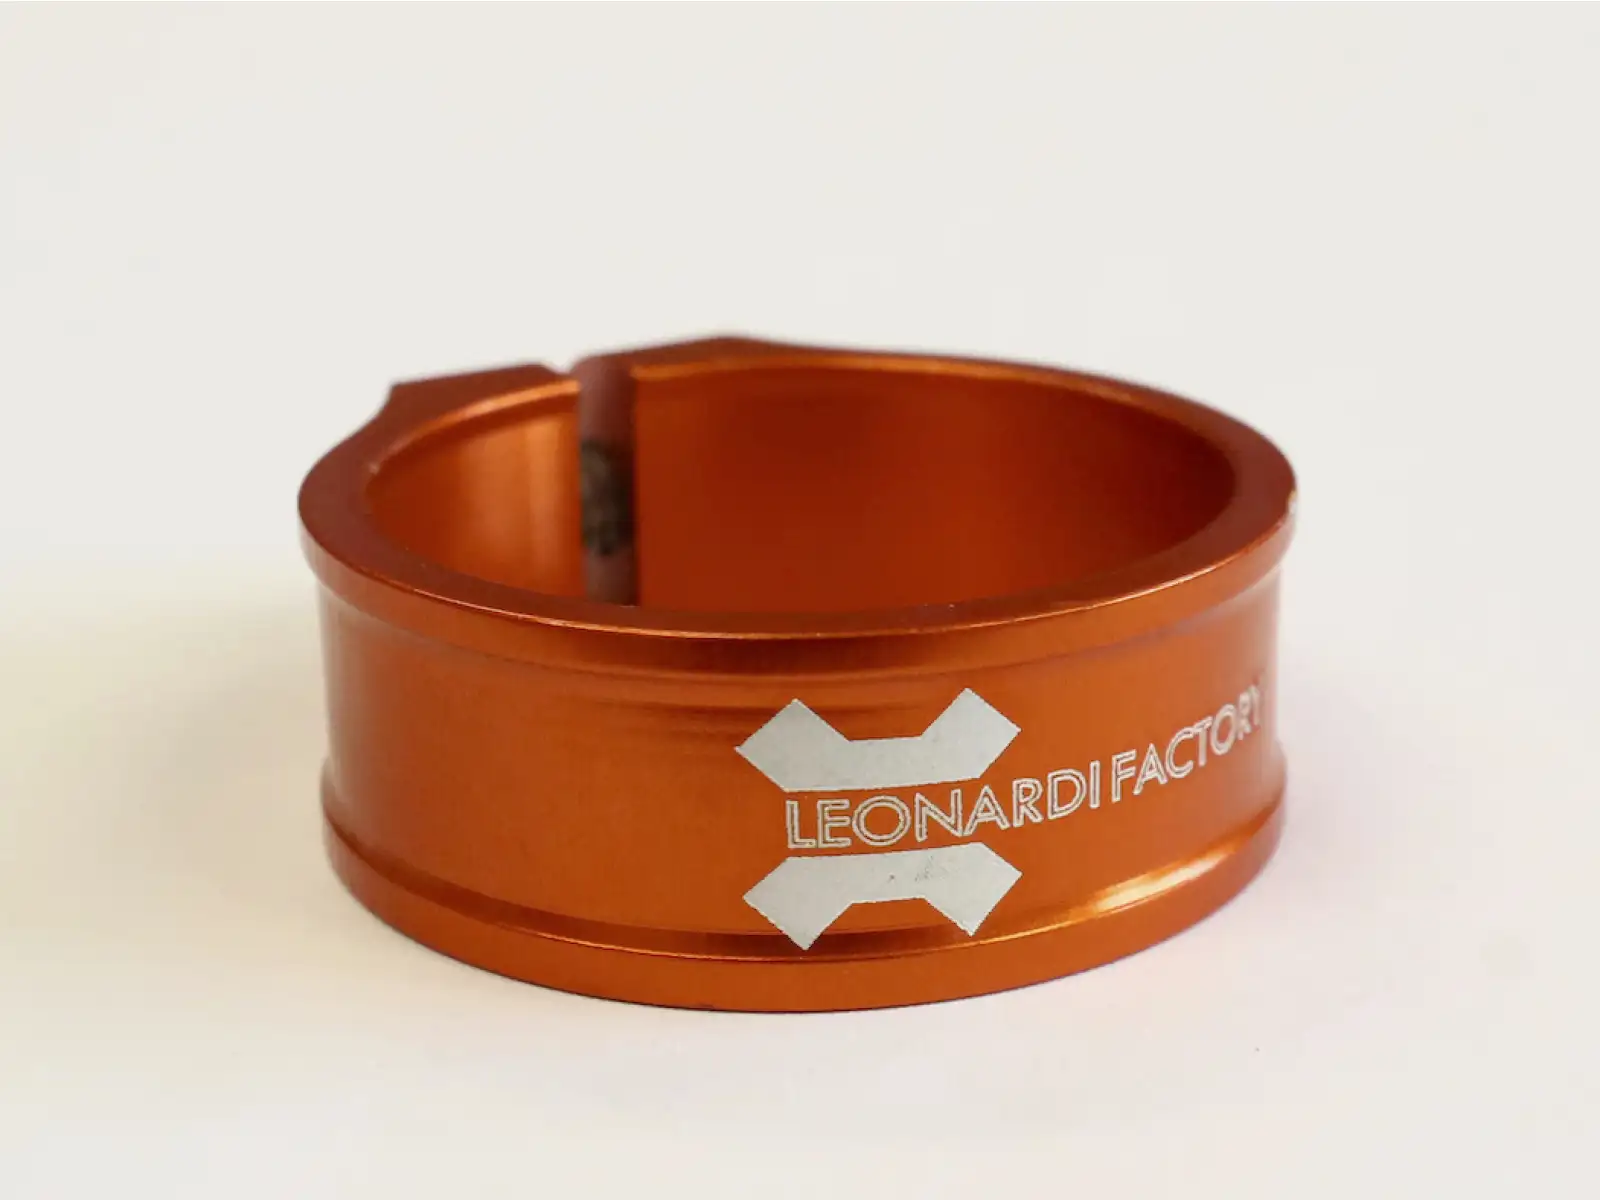 Leonardi Factory Collarino Reggisella sedlová objímka 34,9 mm oranžová